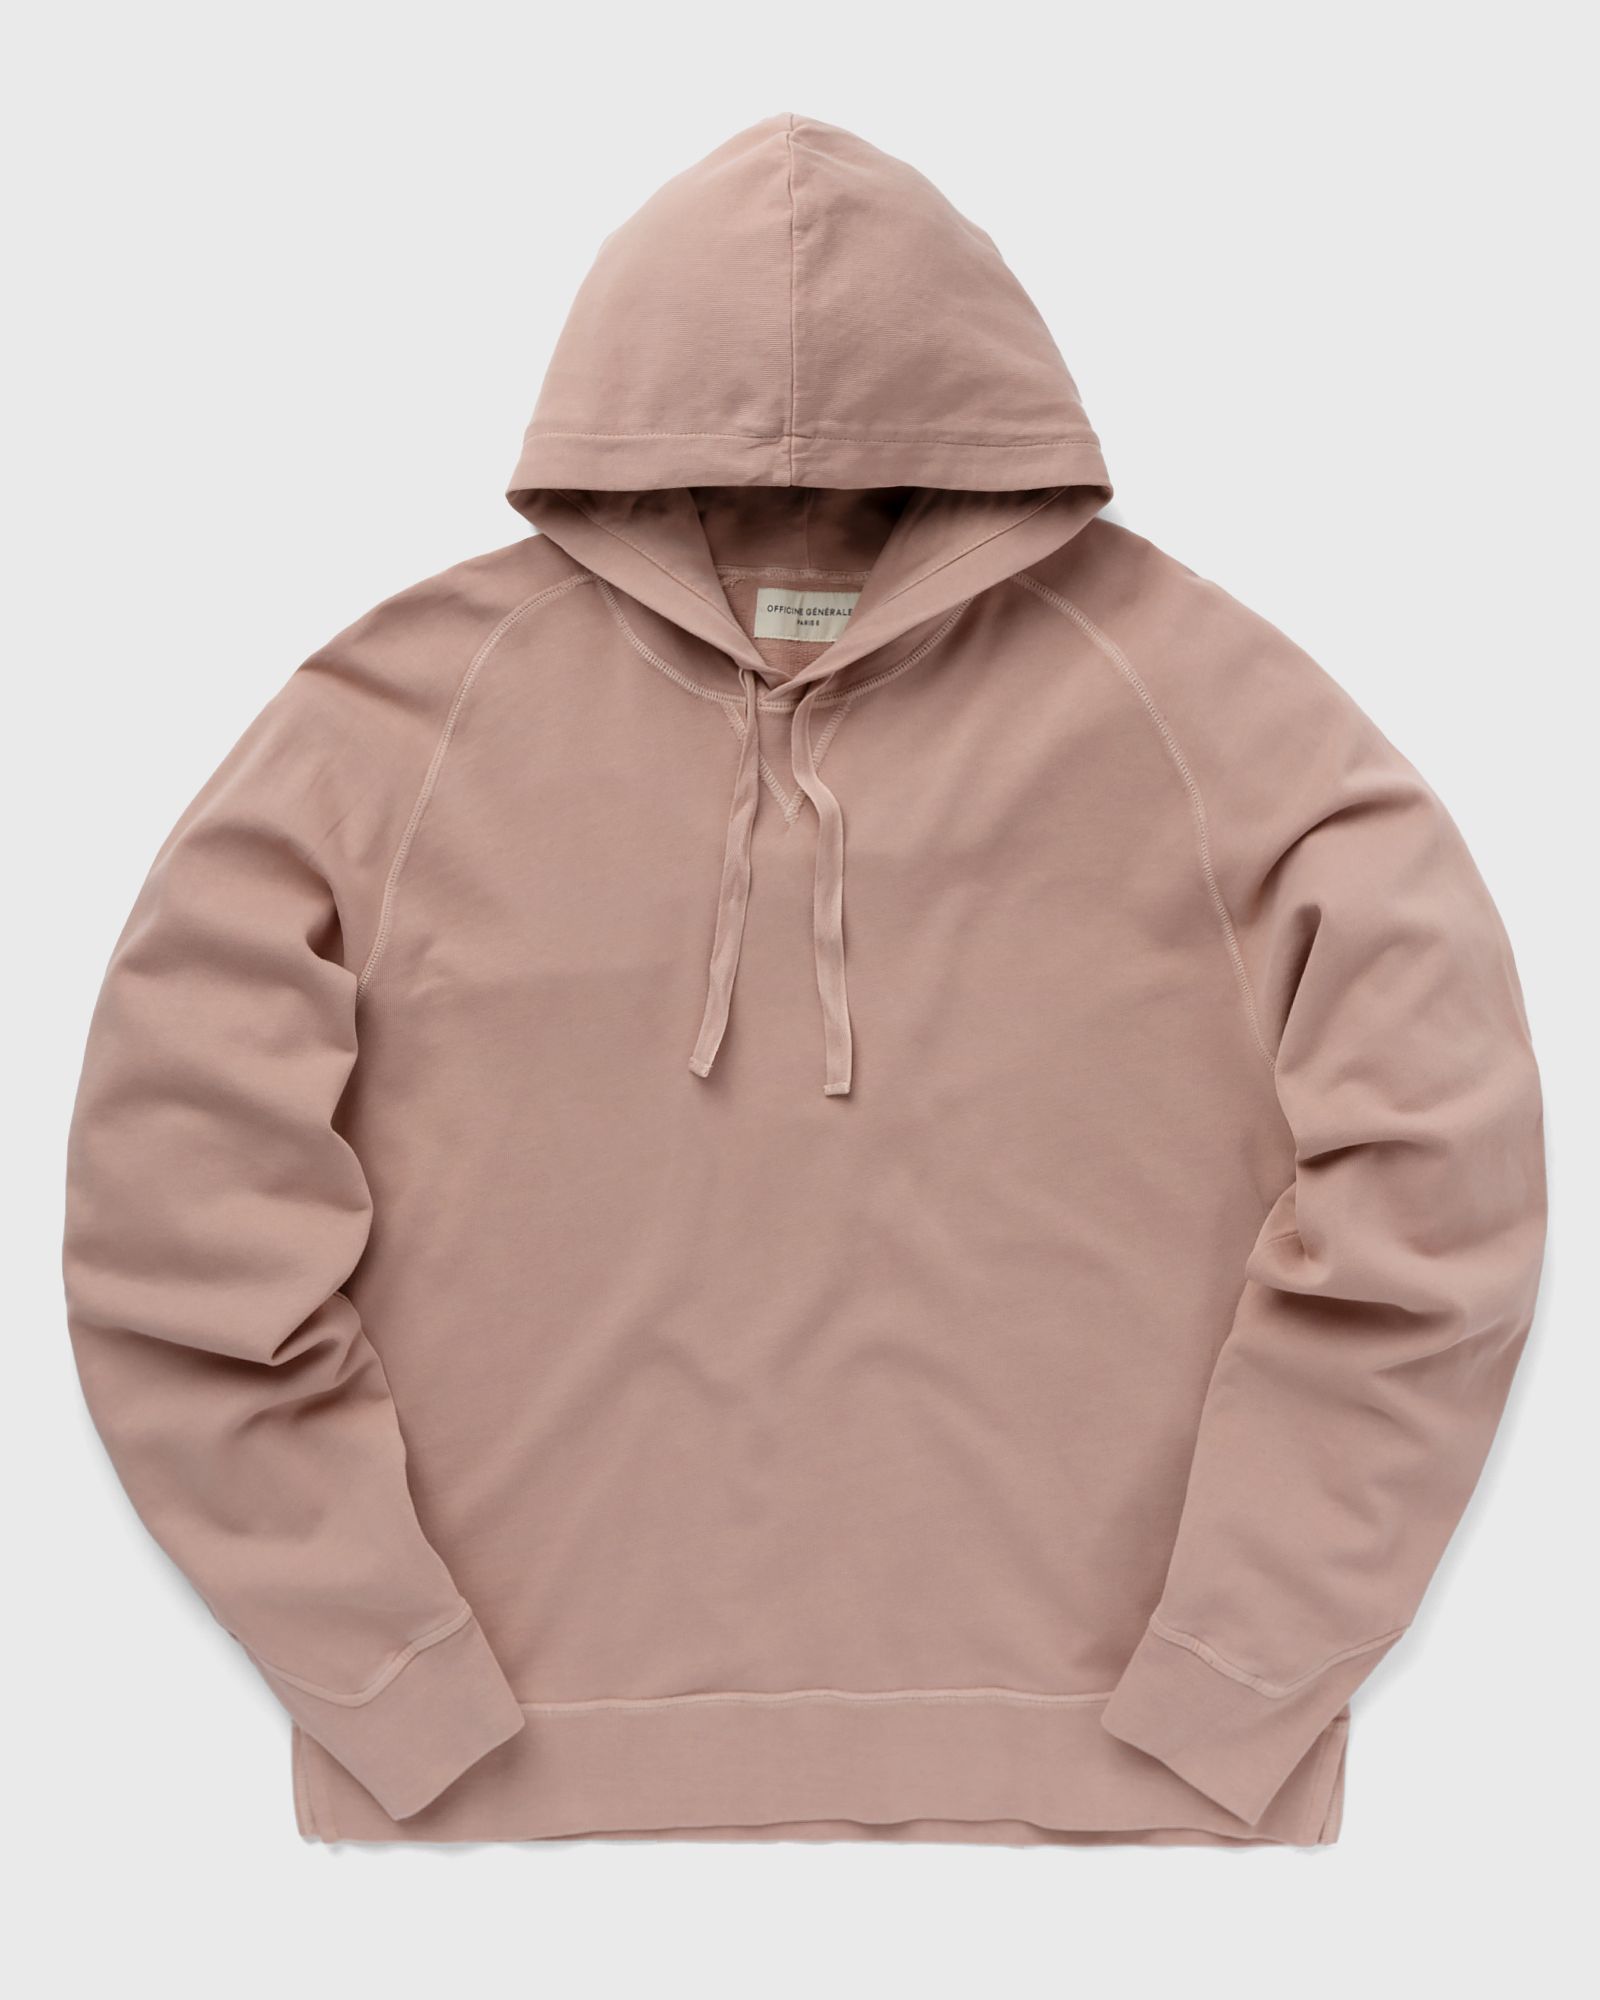 Officine Générale - odin hoodie pgmt dye co fleece men hoodies pink in größe:s